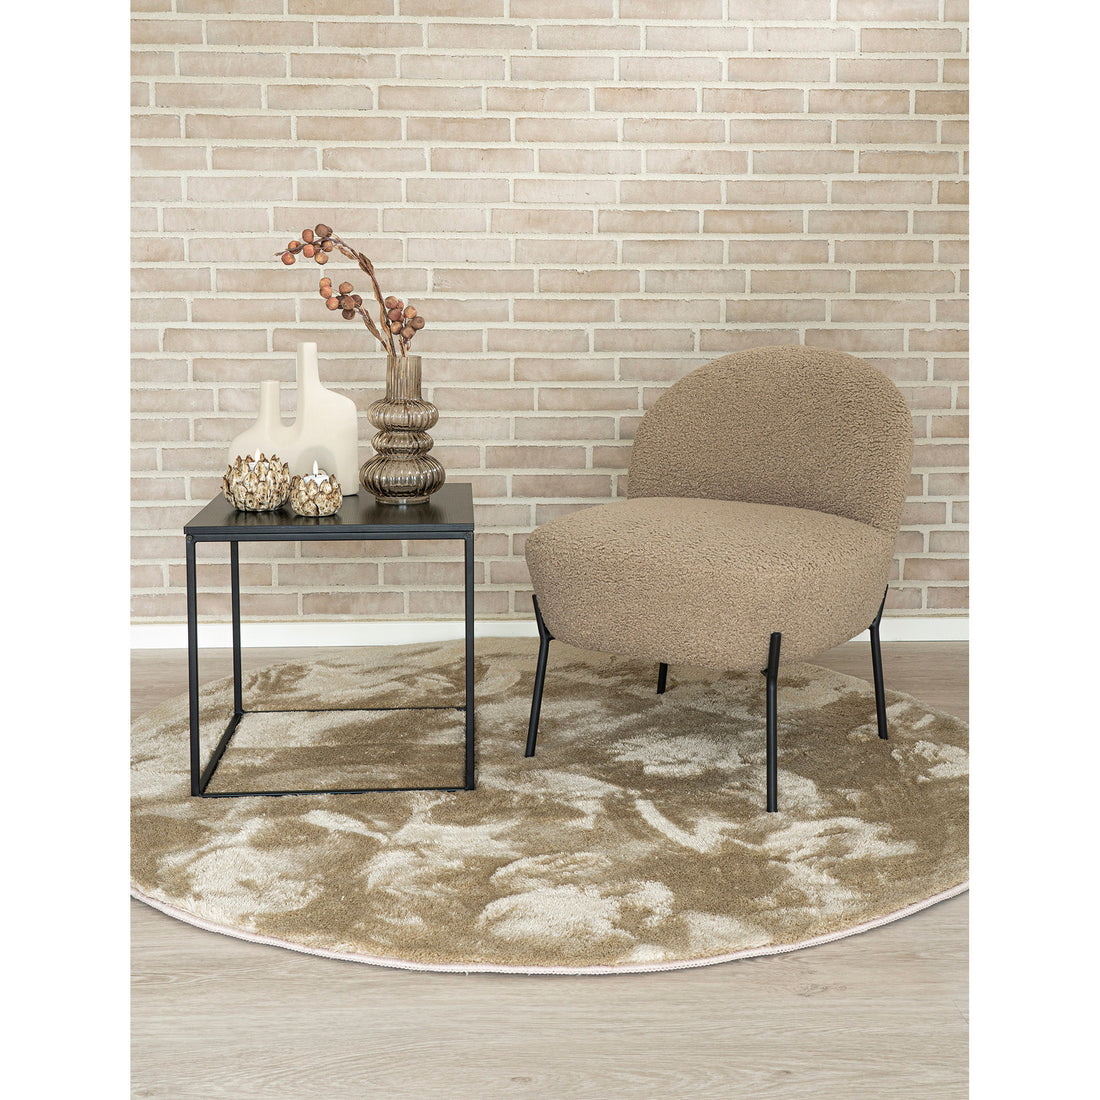 Merida armchair - armchair in gray -brown artificial lambskin with black legs - 1 - pcs